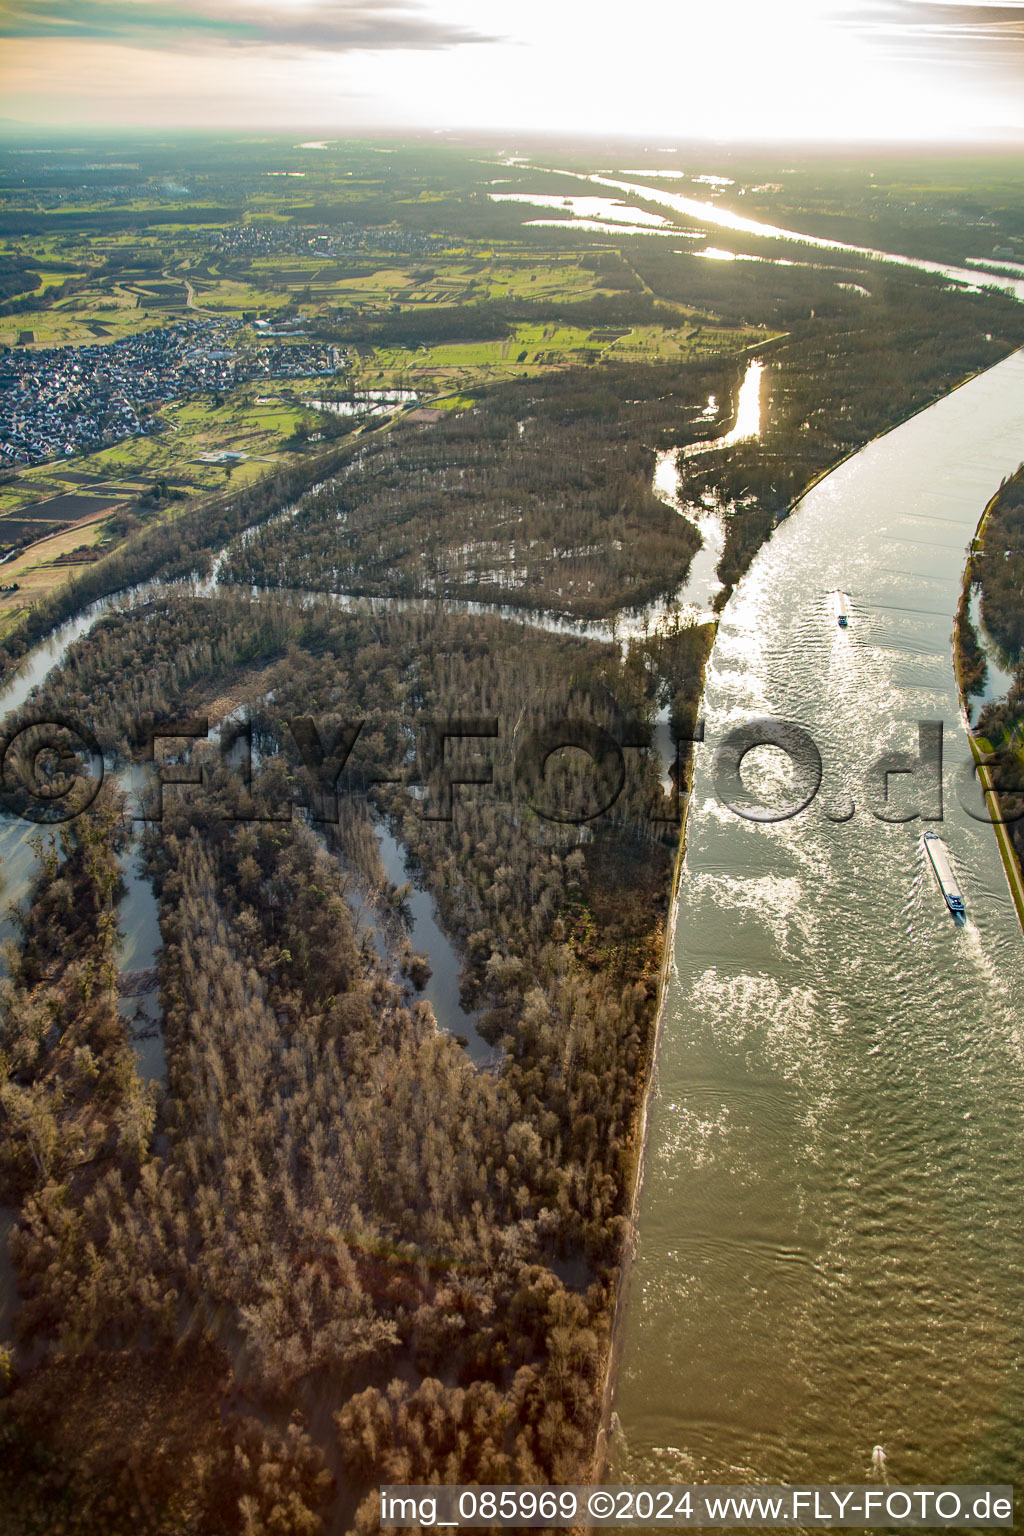 Aerial photograpy of Auer Köpfle Illinger Altrheinauen in Au am Rhein in the state Baden-Wuerttemberg, Germany